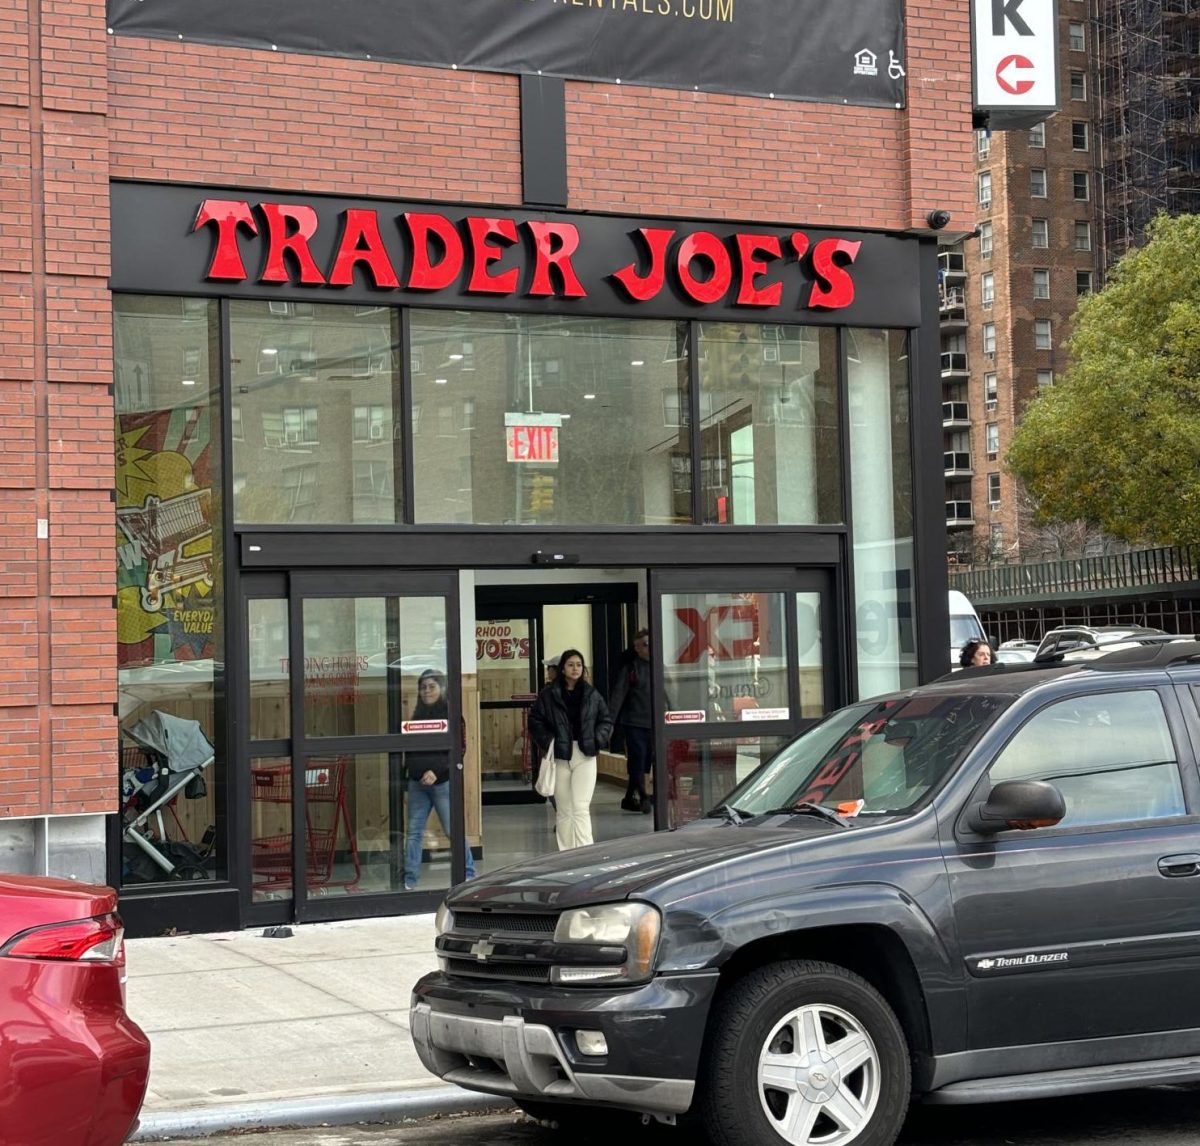 Inside the Aisles of Trader Joe’s